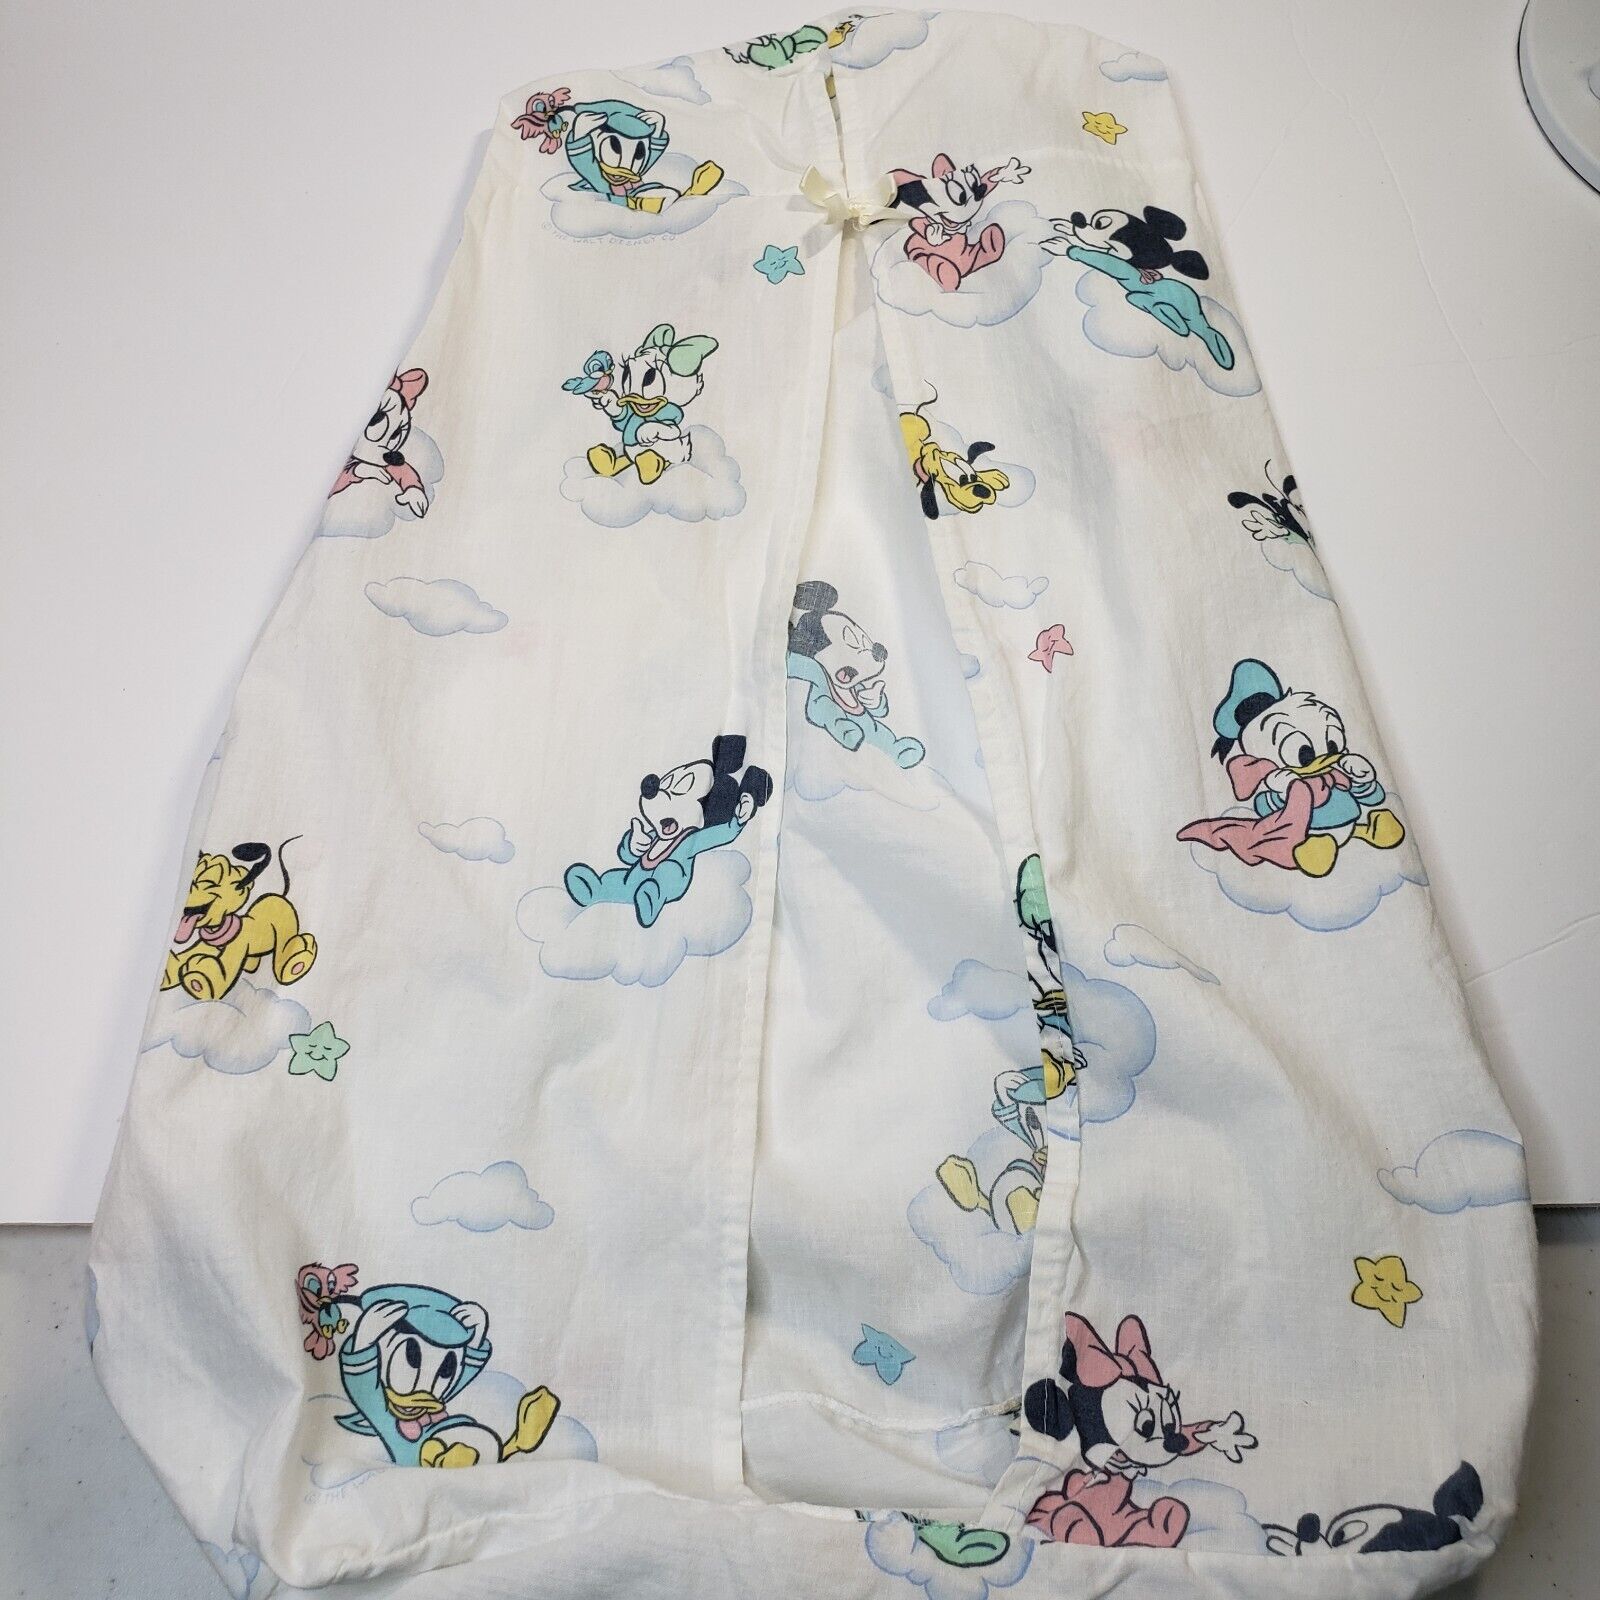 Vintage Dundee Disney Babies On Clouds Hanging Diaper Stacker Holder